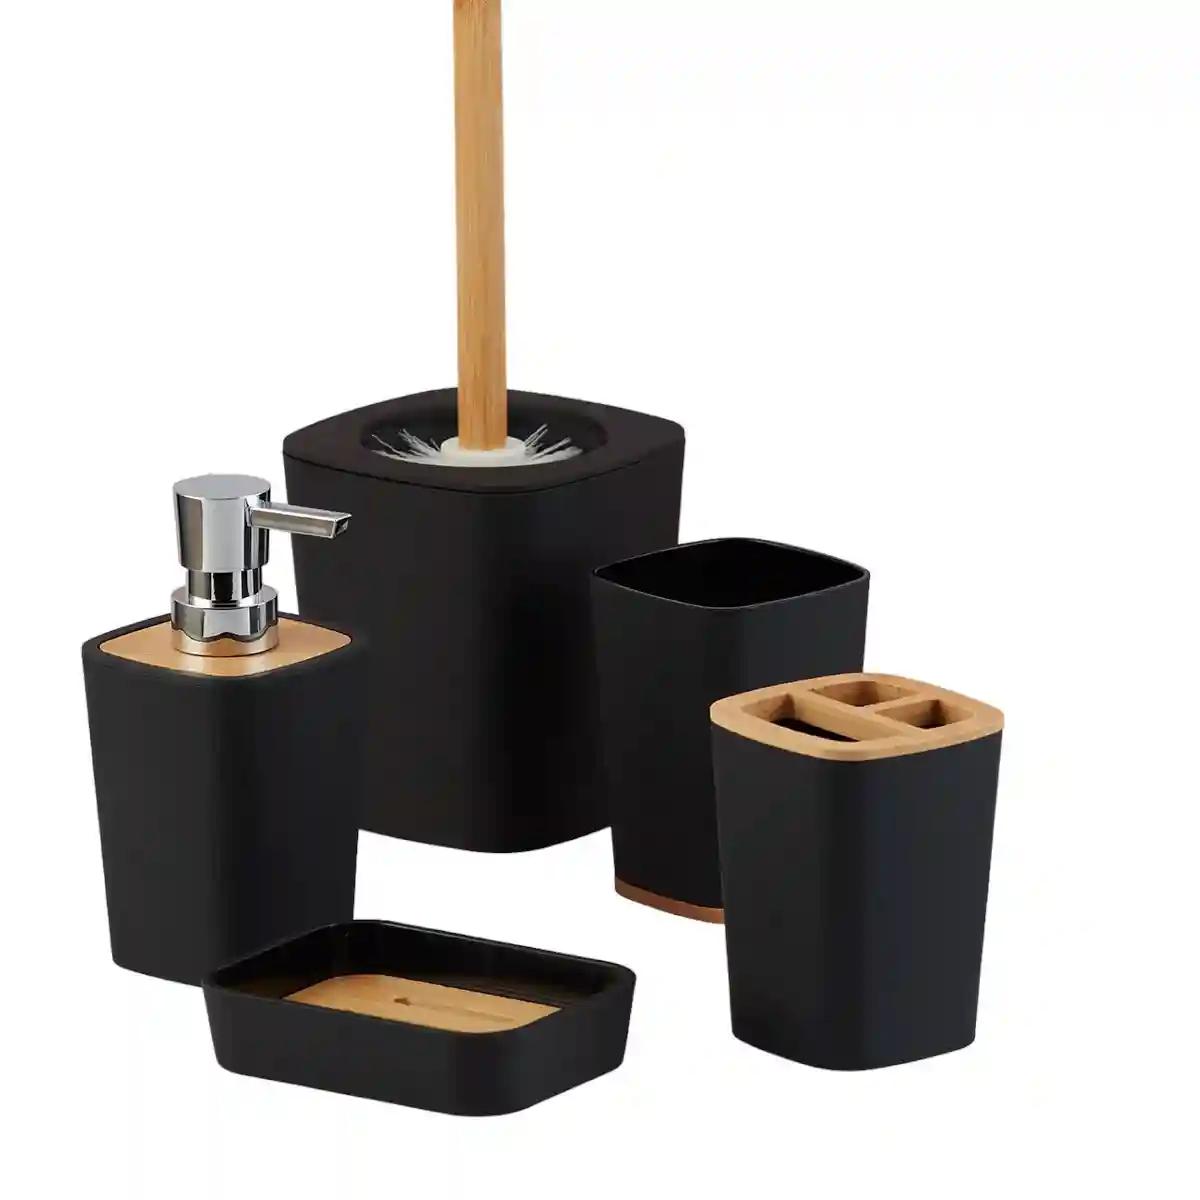 Kookee Acrylic Bathroom Accessories Set of 5, Modern Acrylic Bath Set with Liquid Soap Dispenser and Toothbrush Holder, Bathroom Accessory Set with Toilet Brush Gift Items for Home - Black (10031)